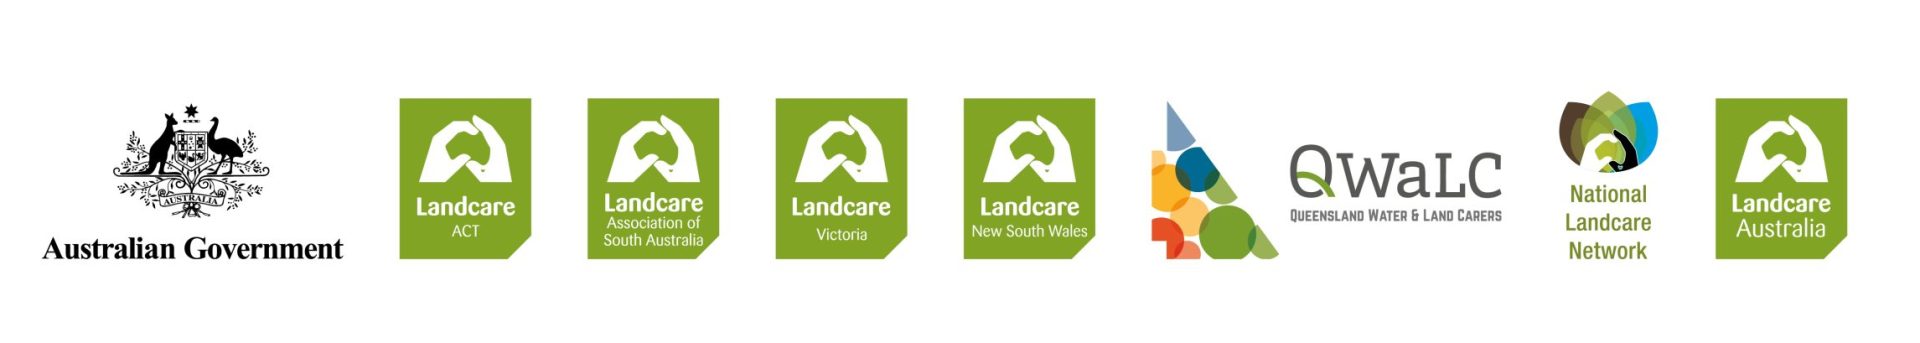 National Landcare Network Logos